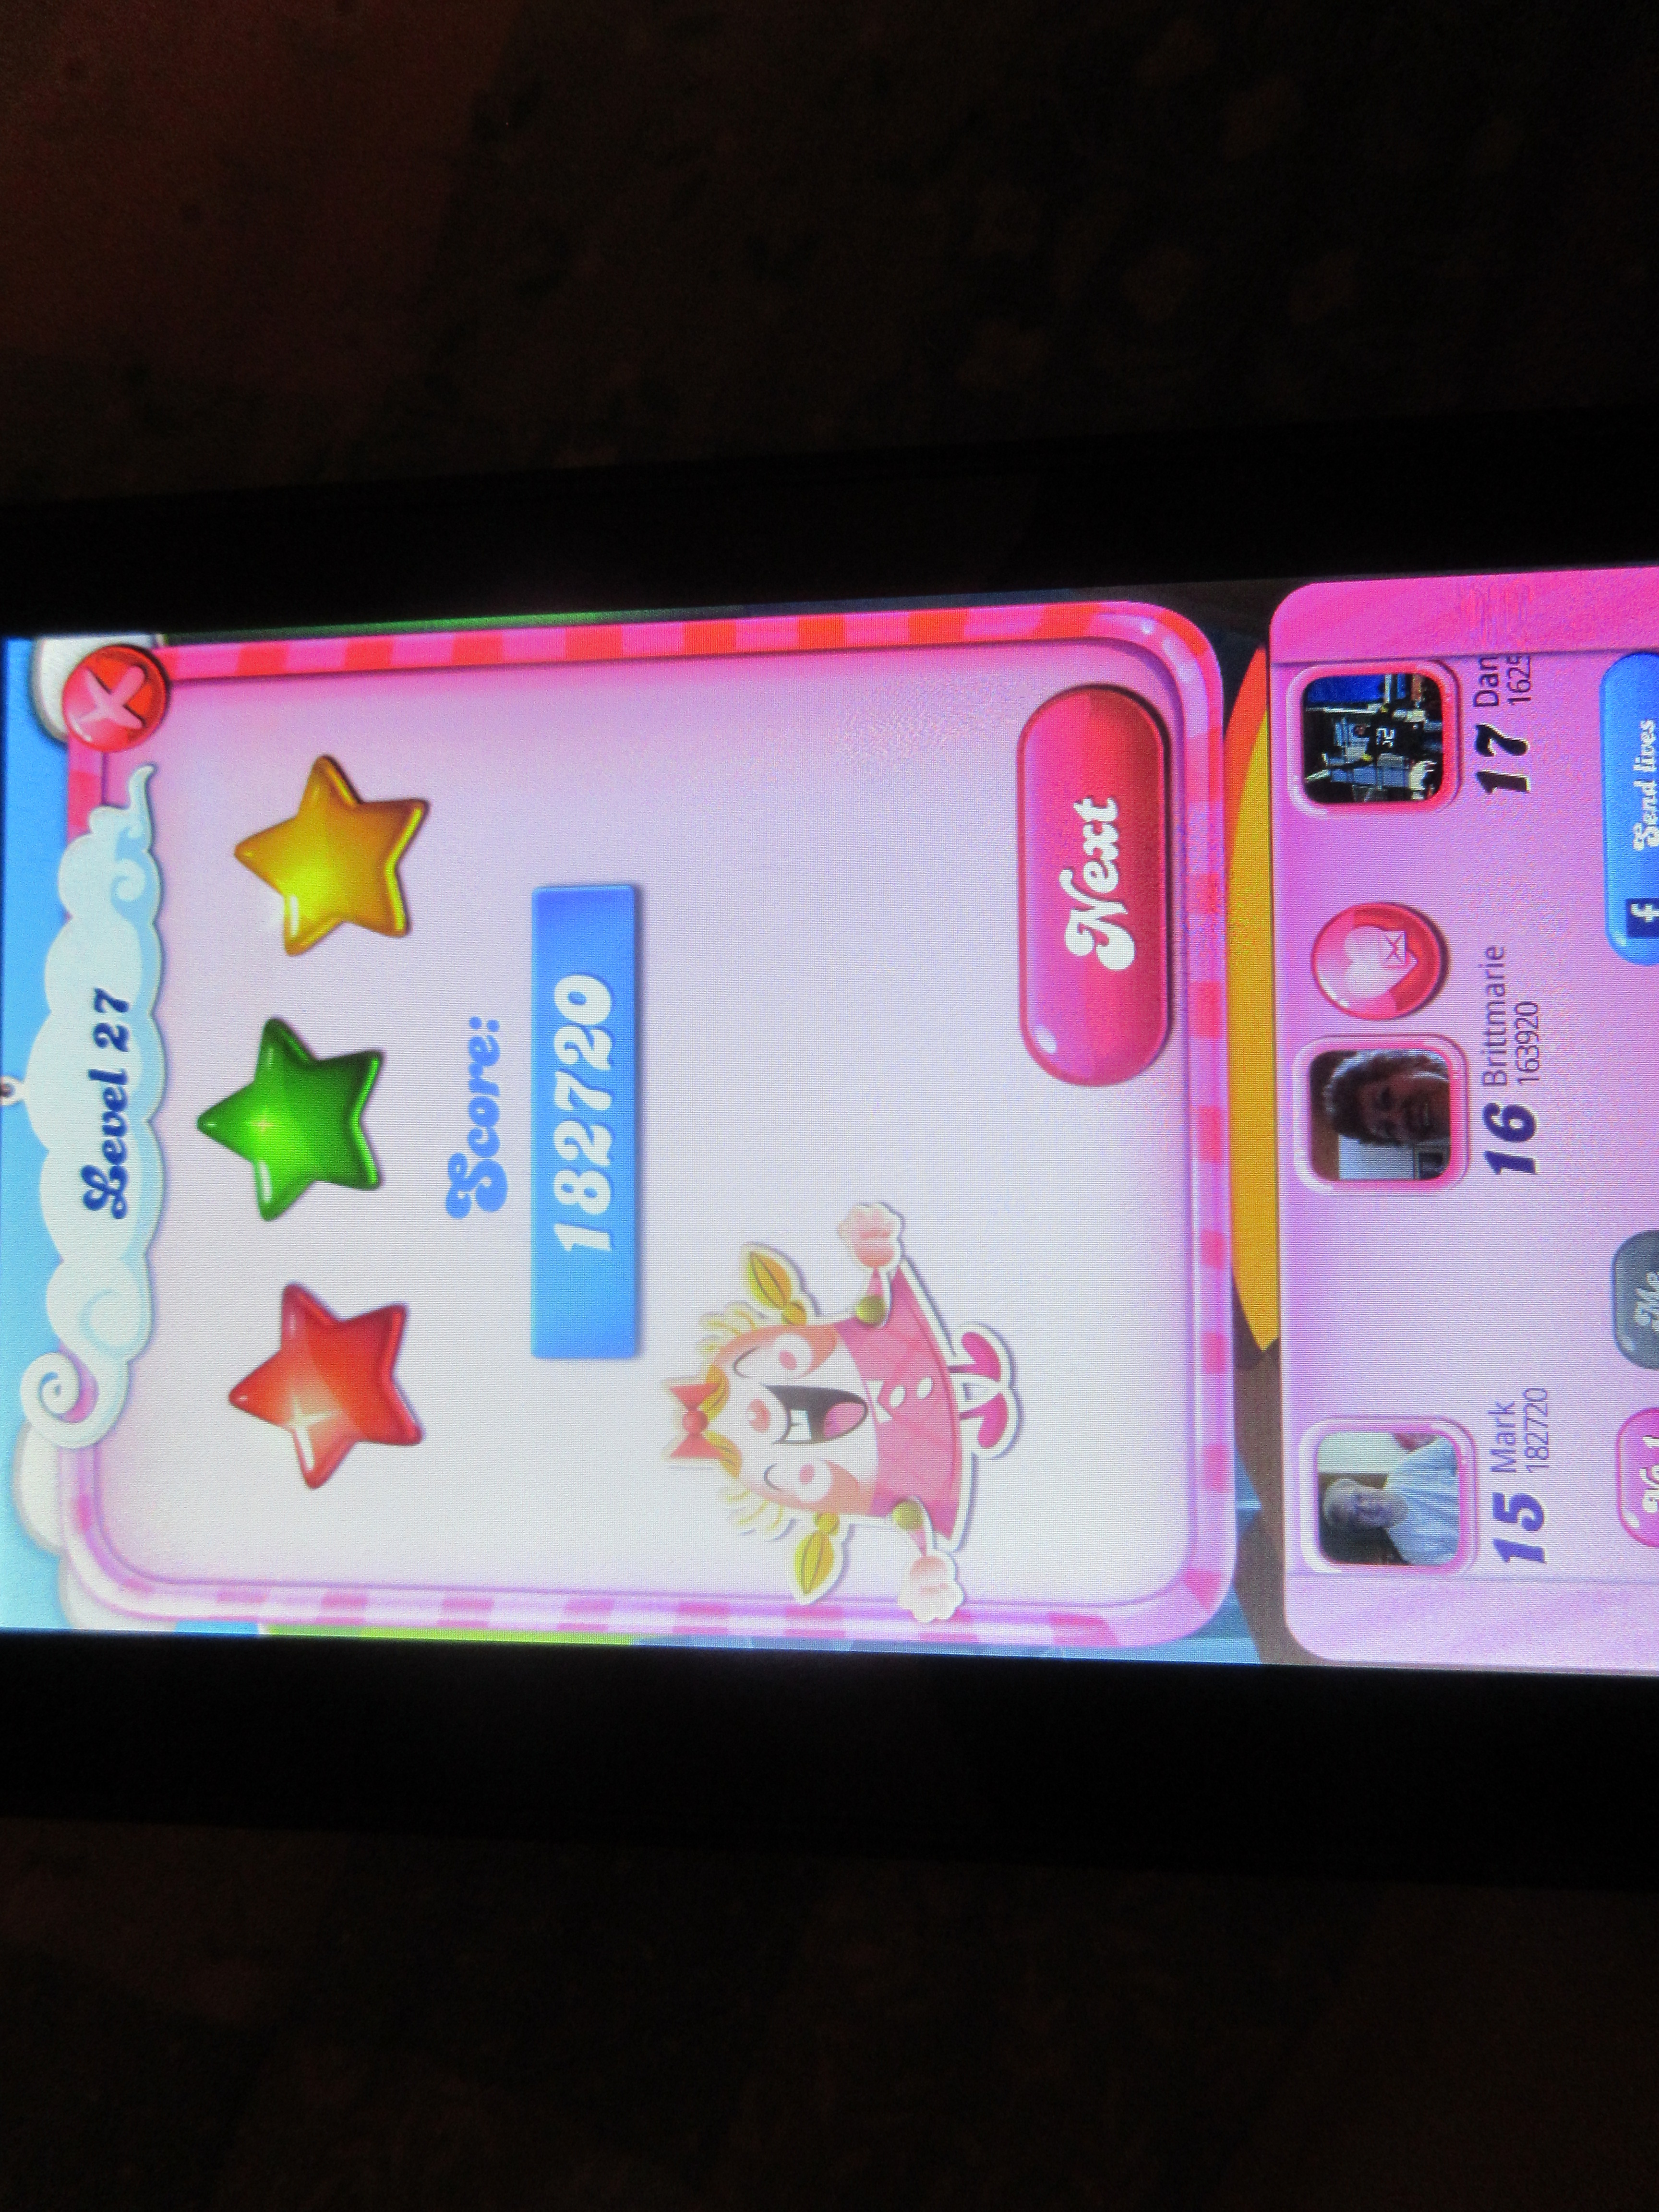 Candy Crush Saga: Level 027 182,720 points